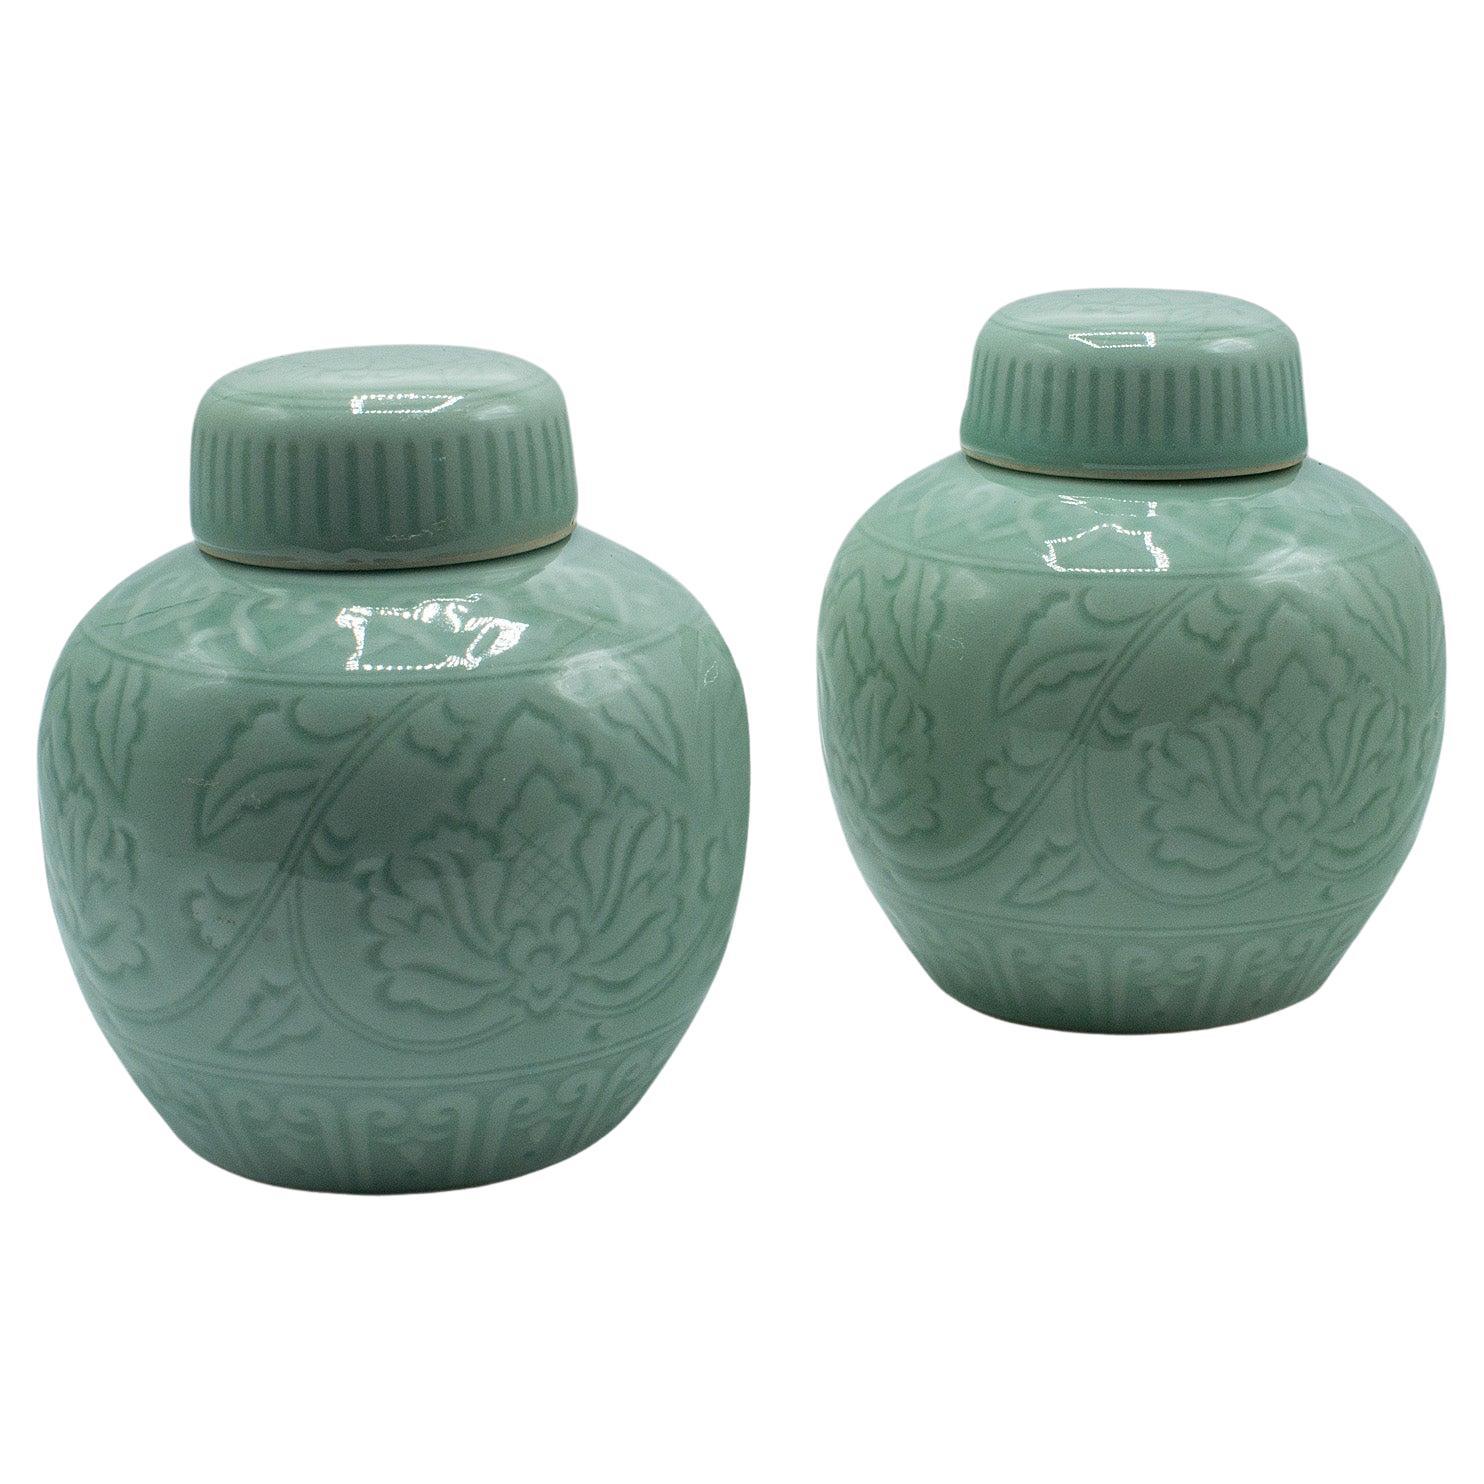 https://a.1stdibscdn.com/pair-of-antique-decorative-spice-jars-chinese-celadon-ceramic-pot-victorian-for-sale/f_26453/f_293701121656595722656/f_29370112_1656595723101_bg_processed.jpg